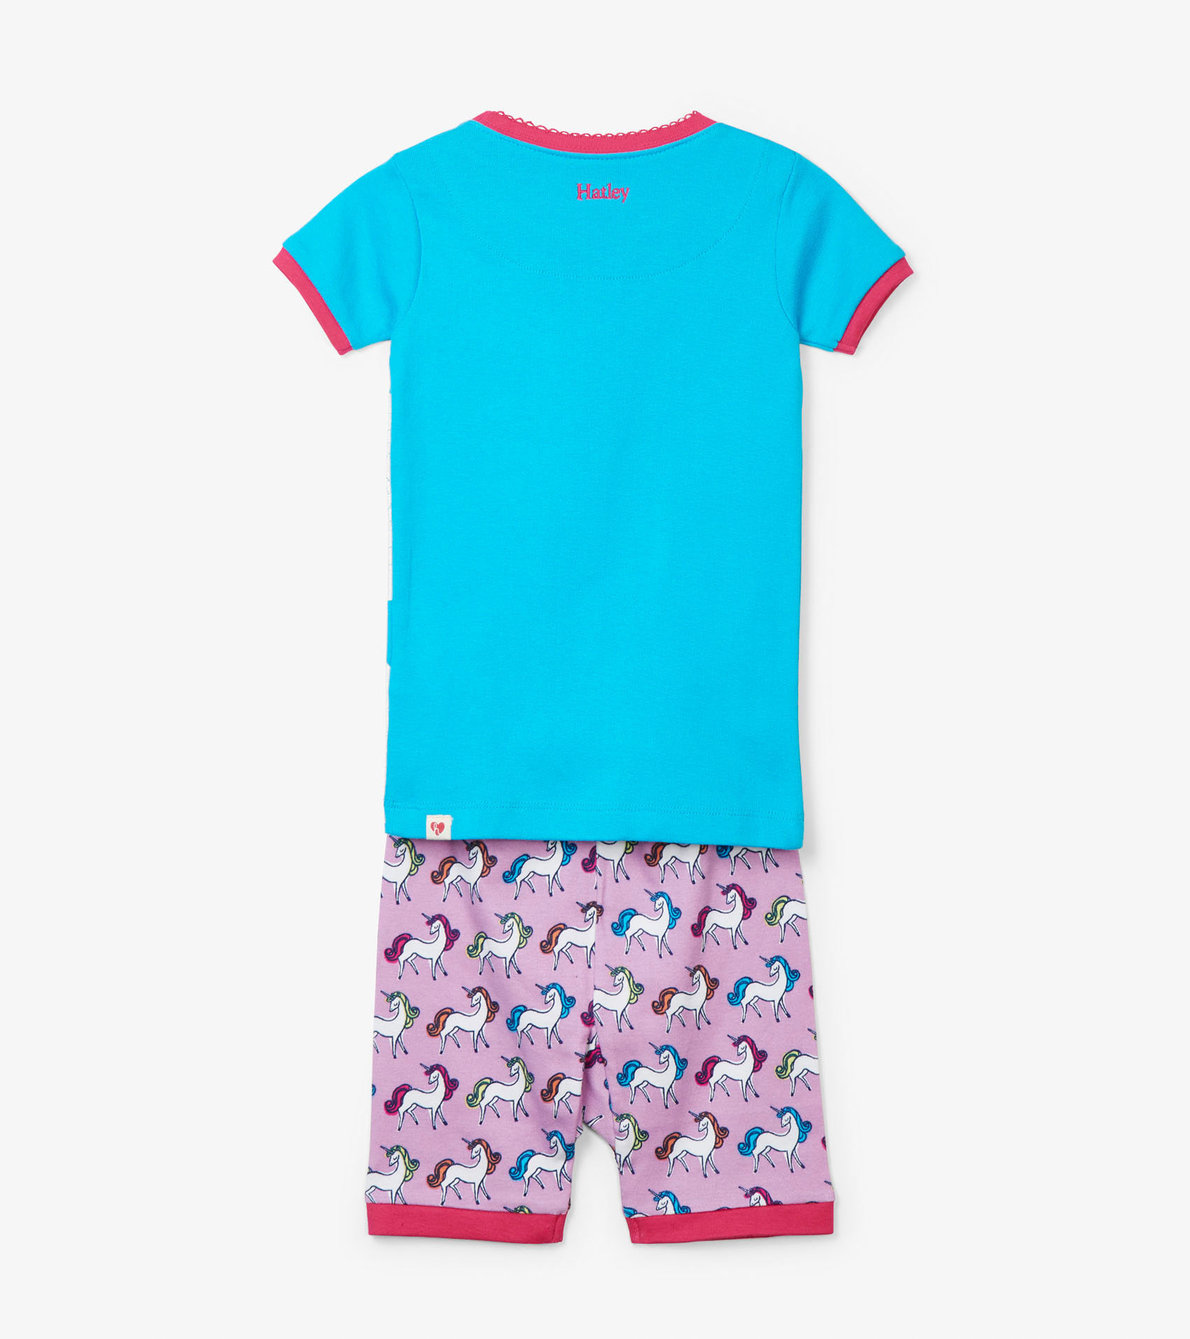 View larger image of Rainbow Unicorns Appliqué Short Pajama Set